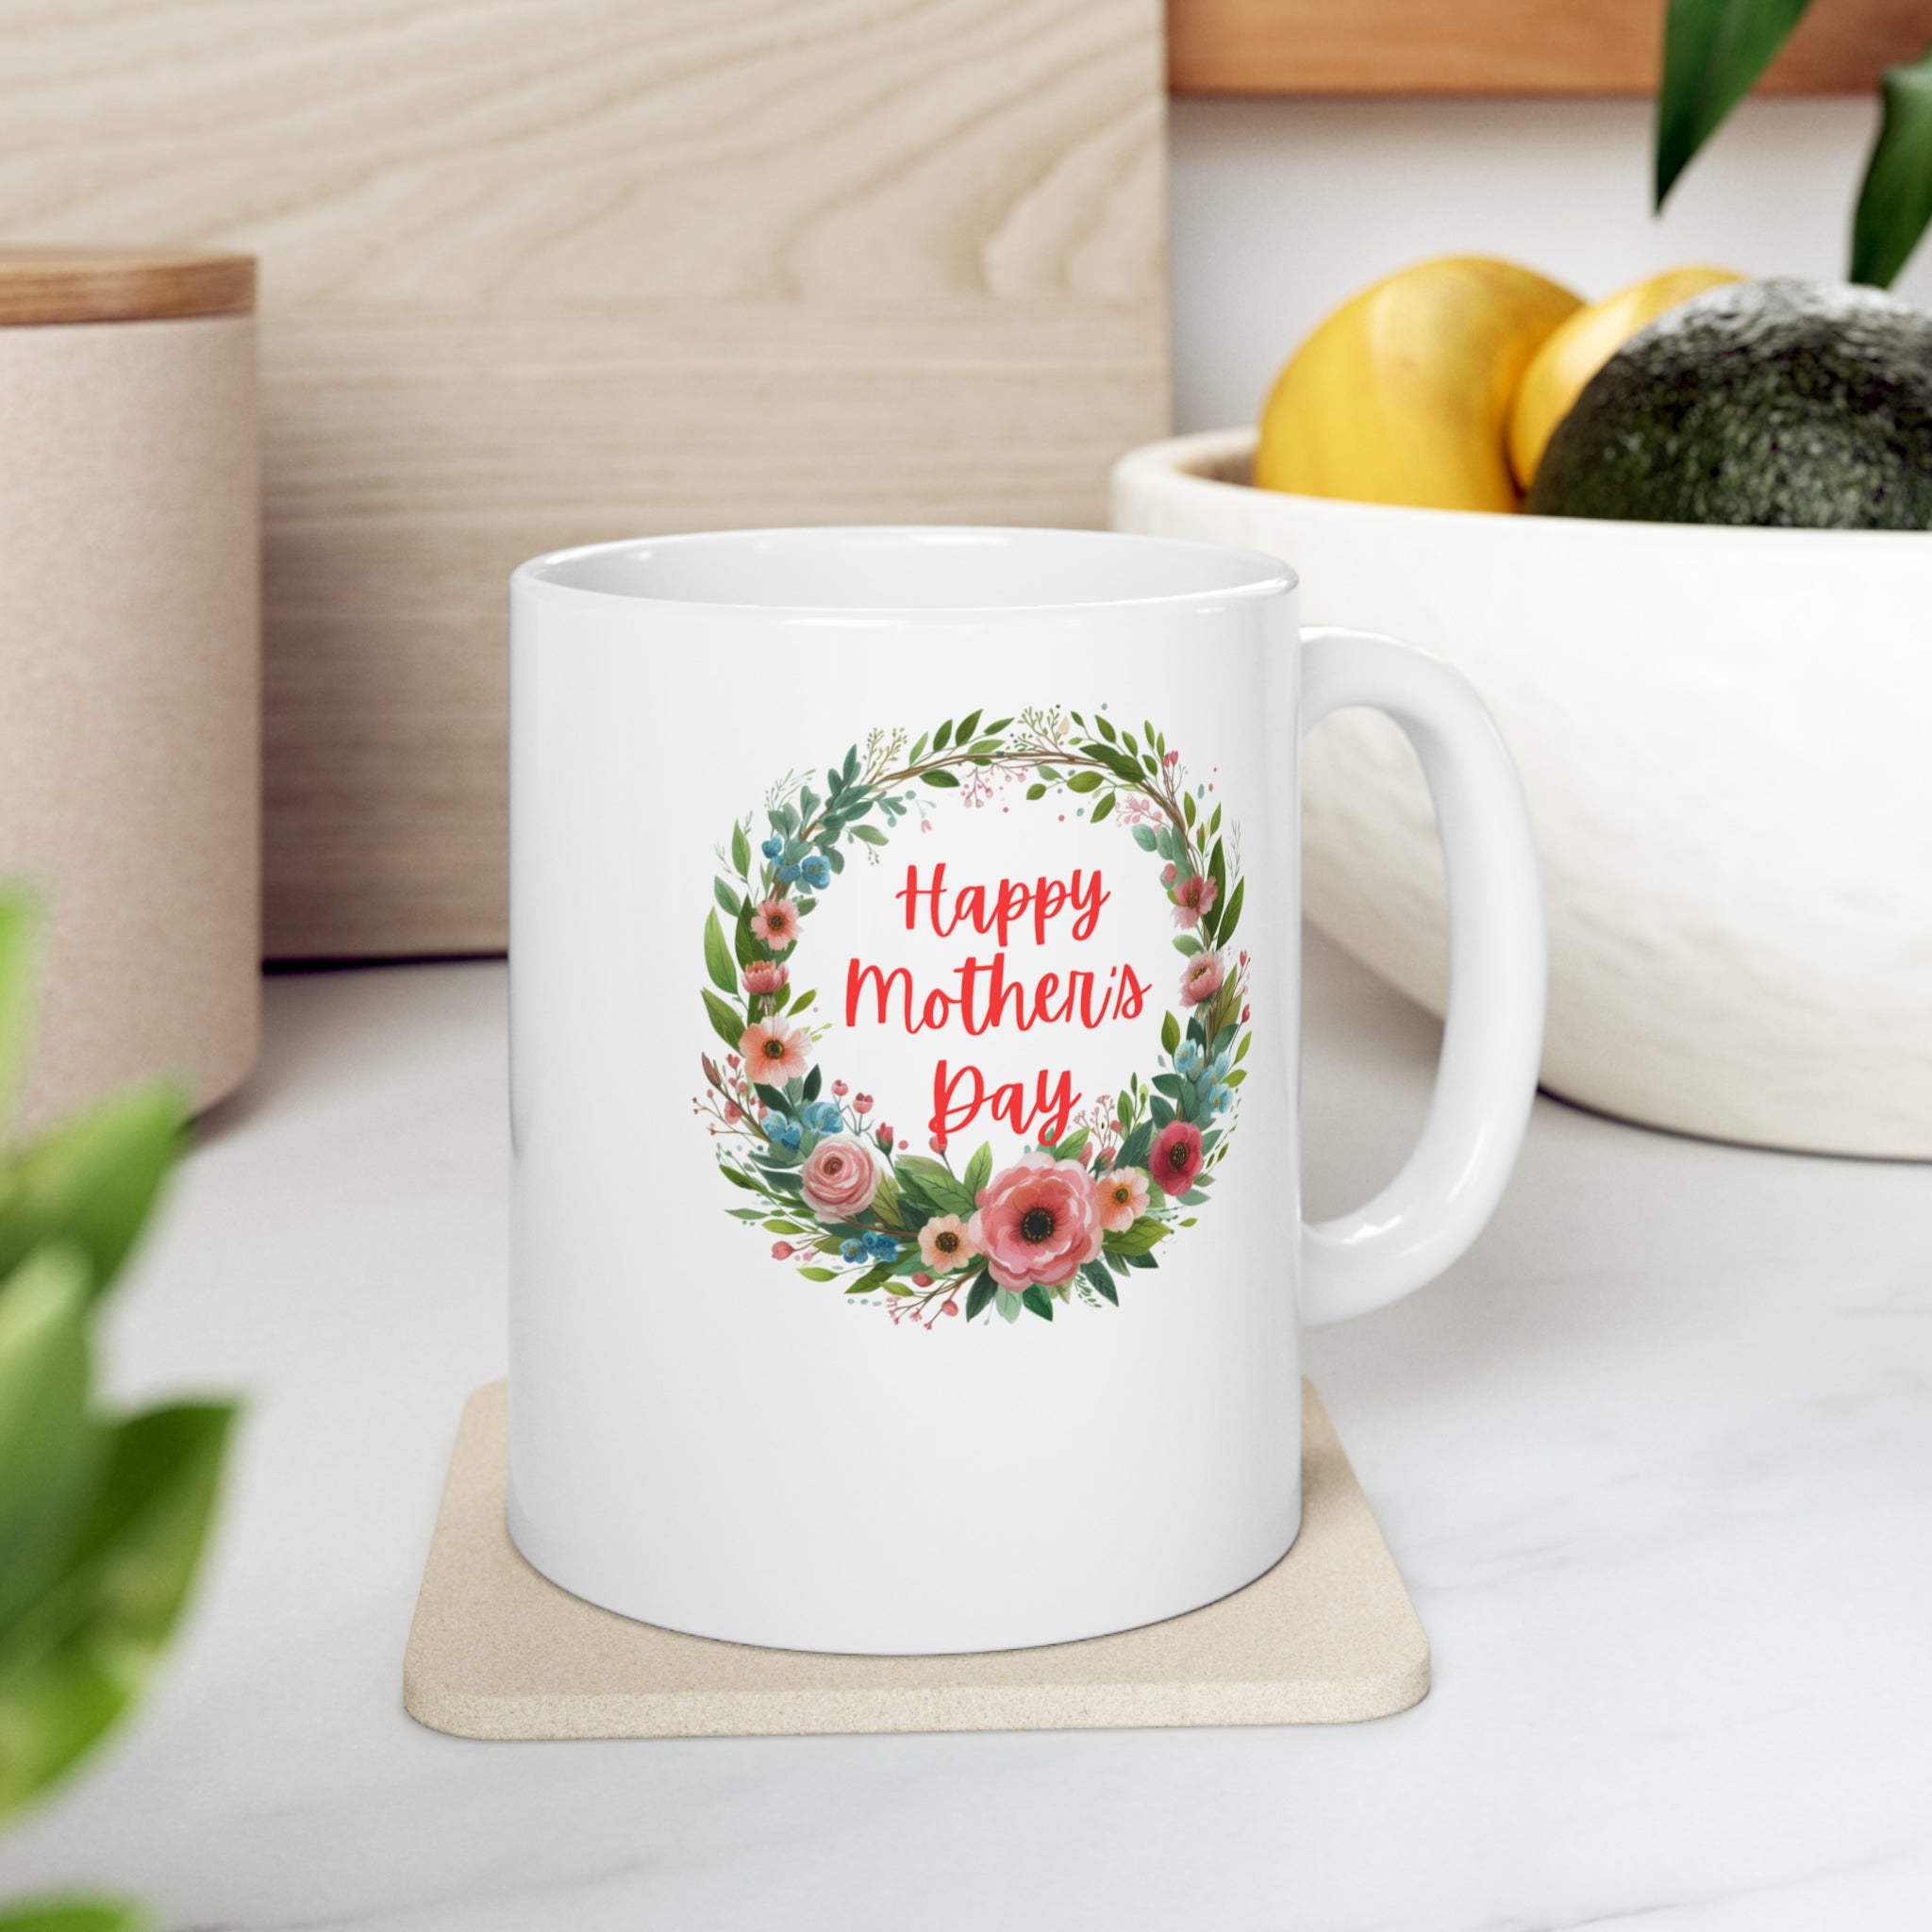 Happy Mother's day Ceramic Mug, 11oz Mug, Personalized Mug for Mom, Gift for Mom, Mother's Day Gift, Gift for New Mom